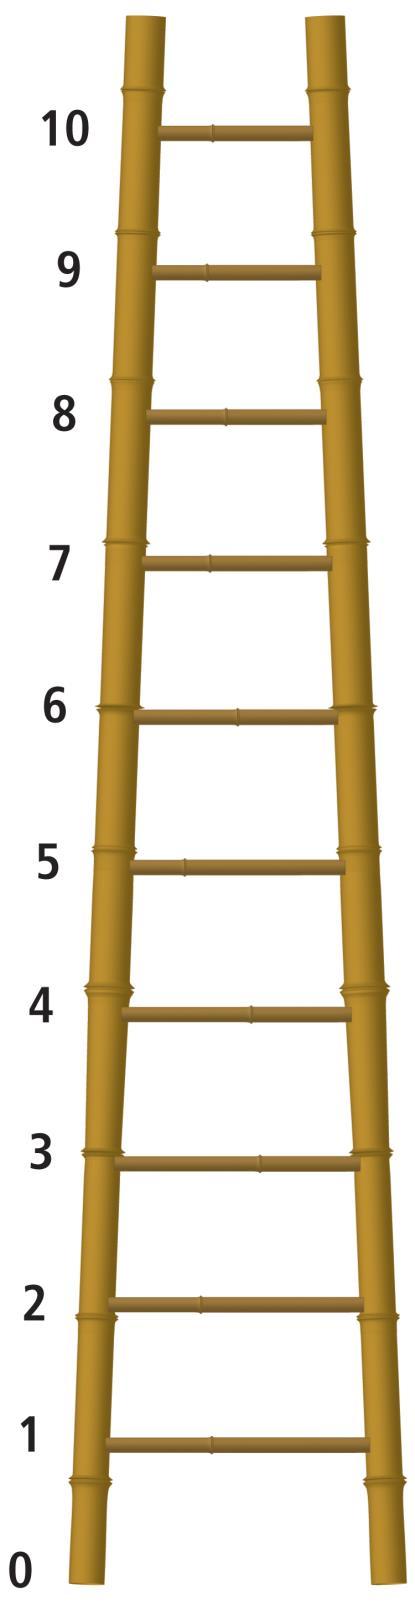 Appendix 1: Response ladder